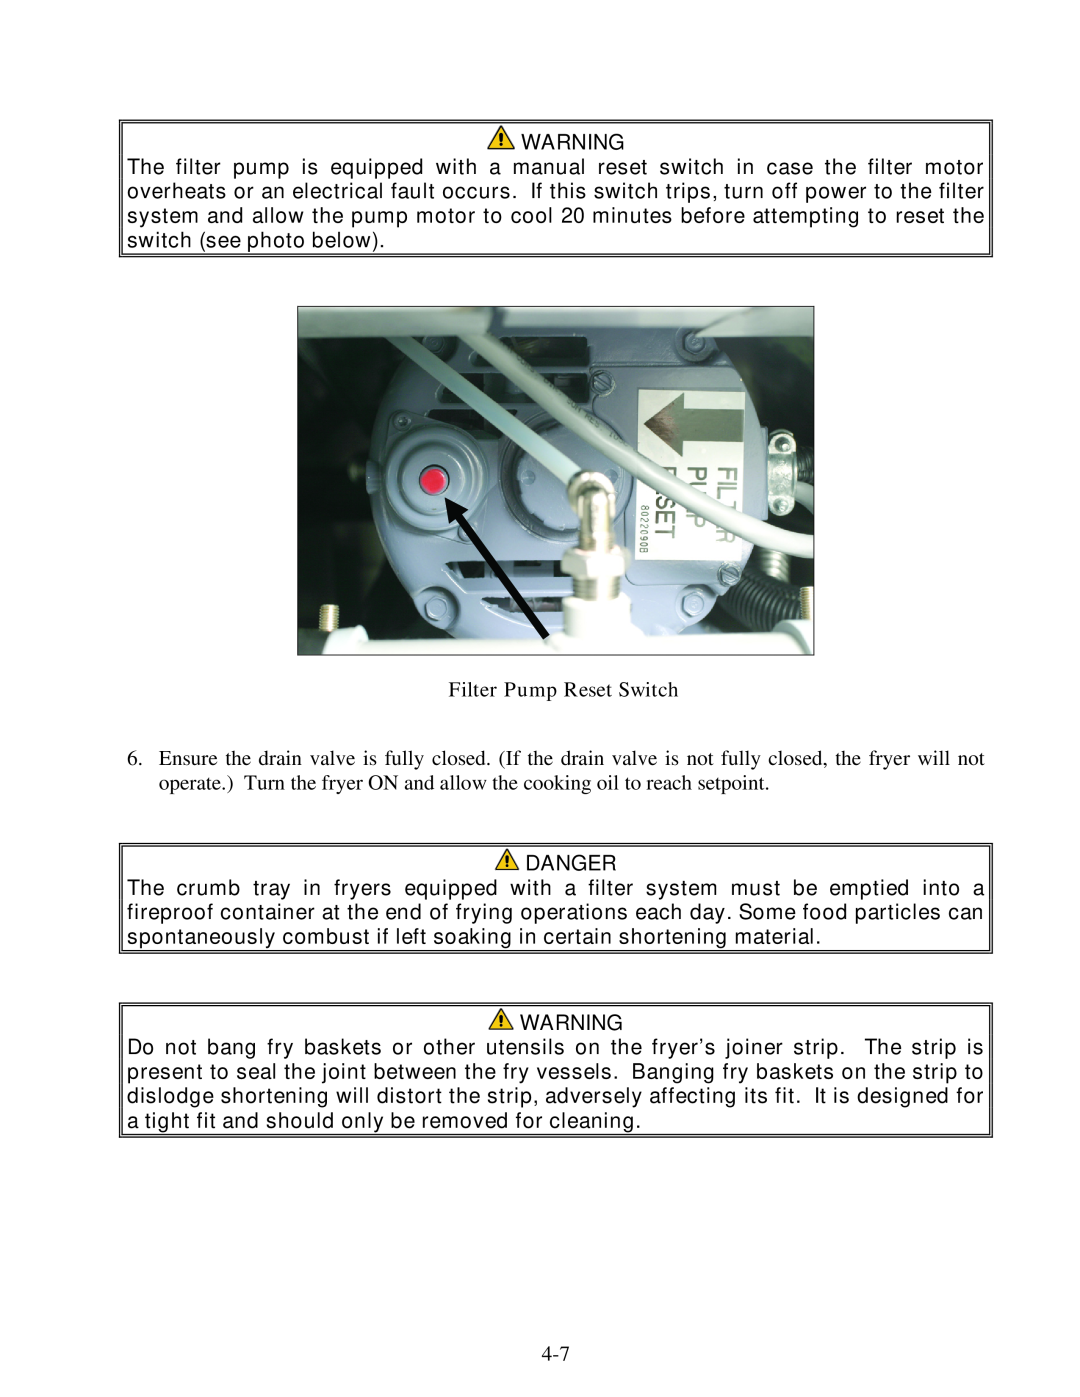 Frymaster 8195991 operation manual Filter Pump Reset Switch, Danger 